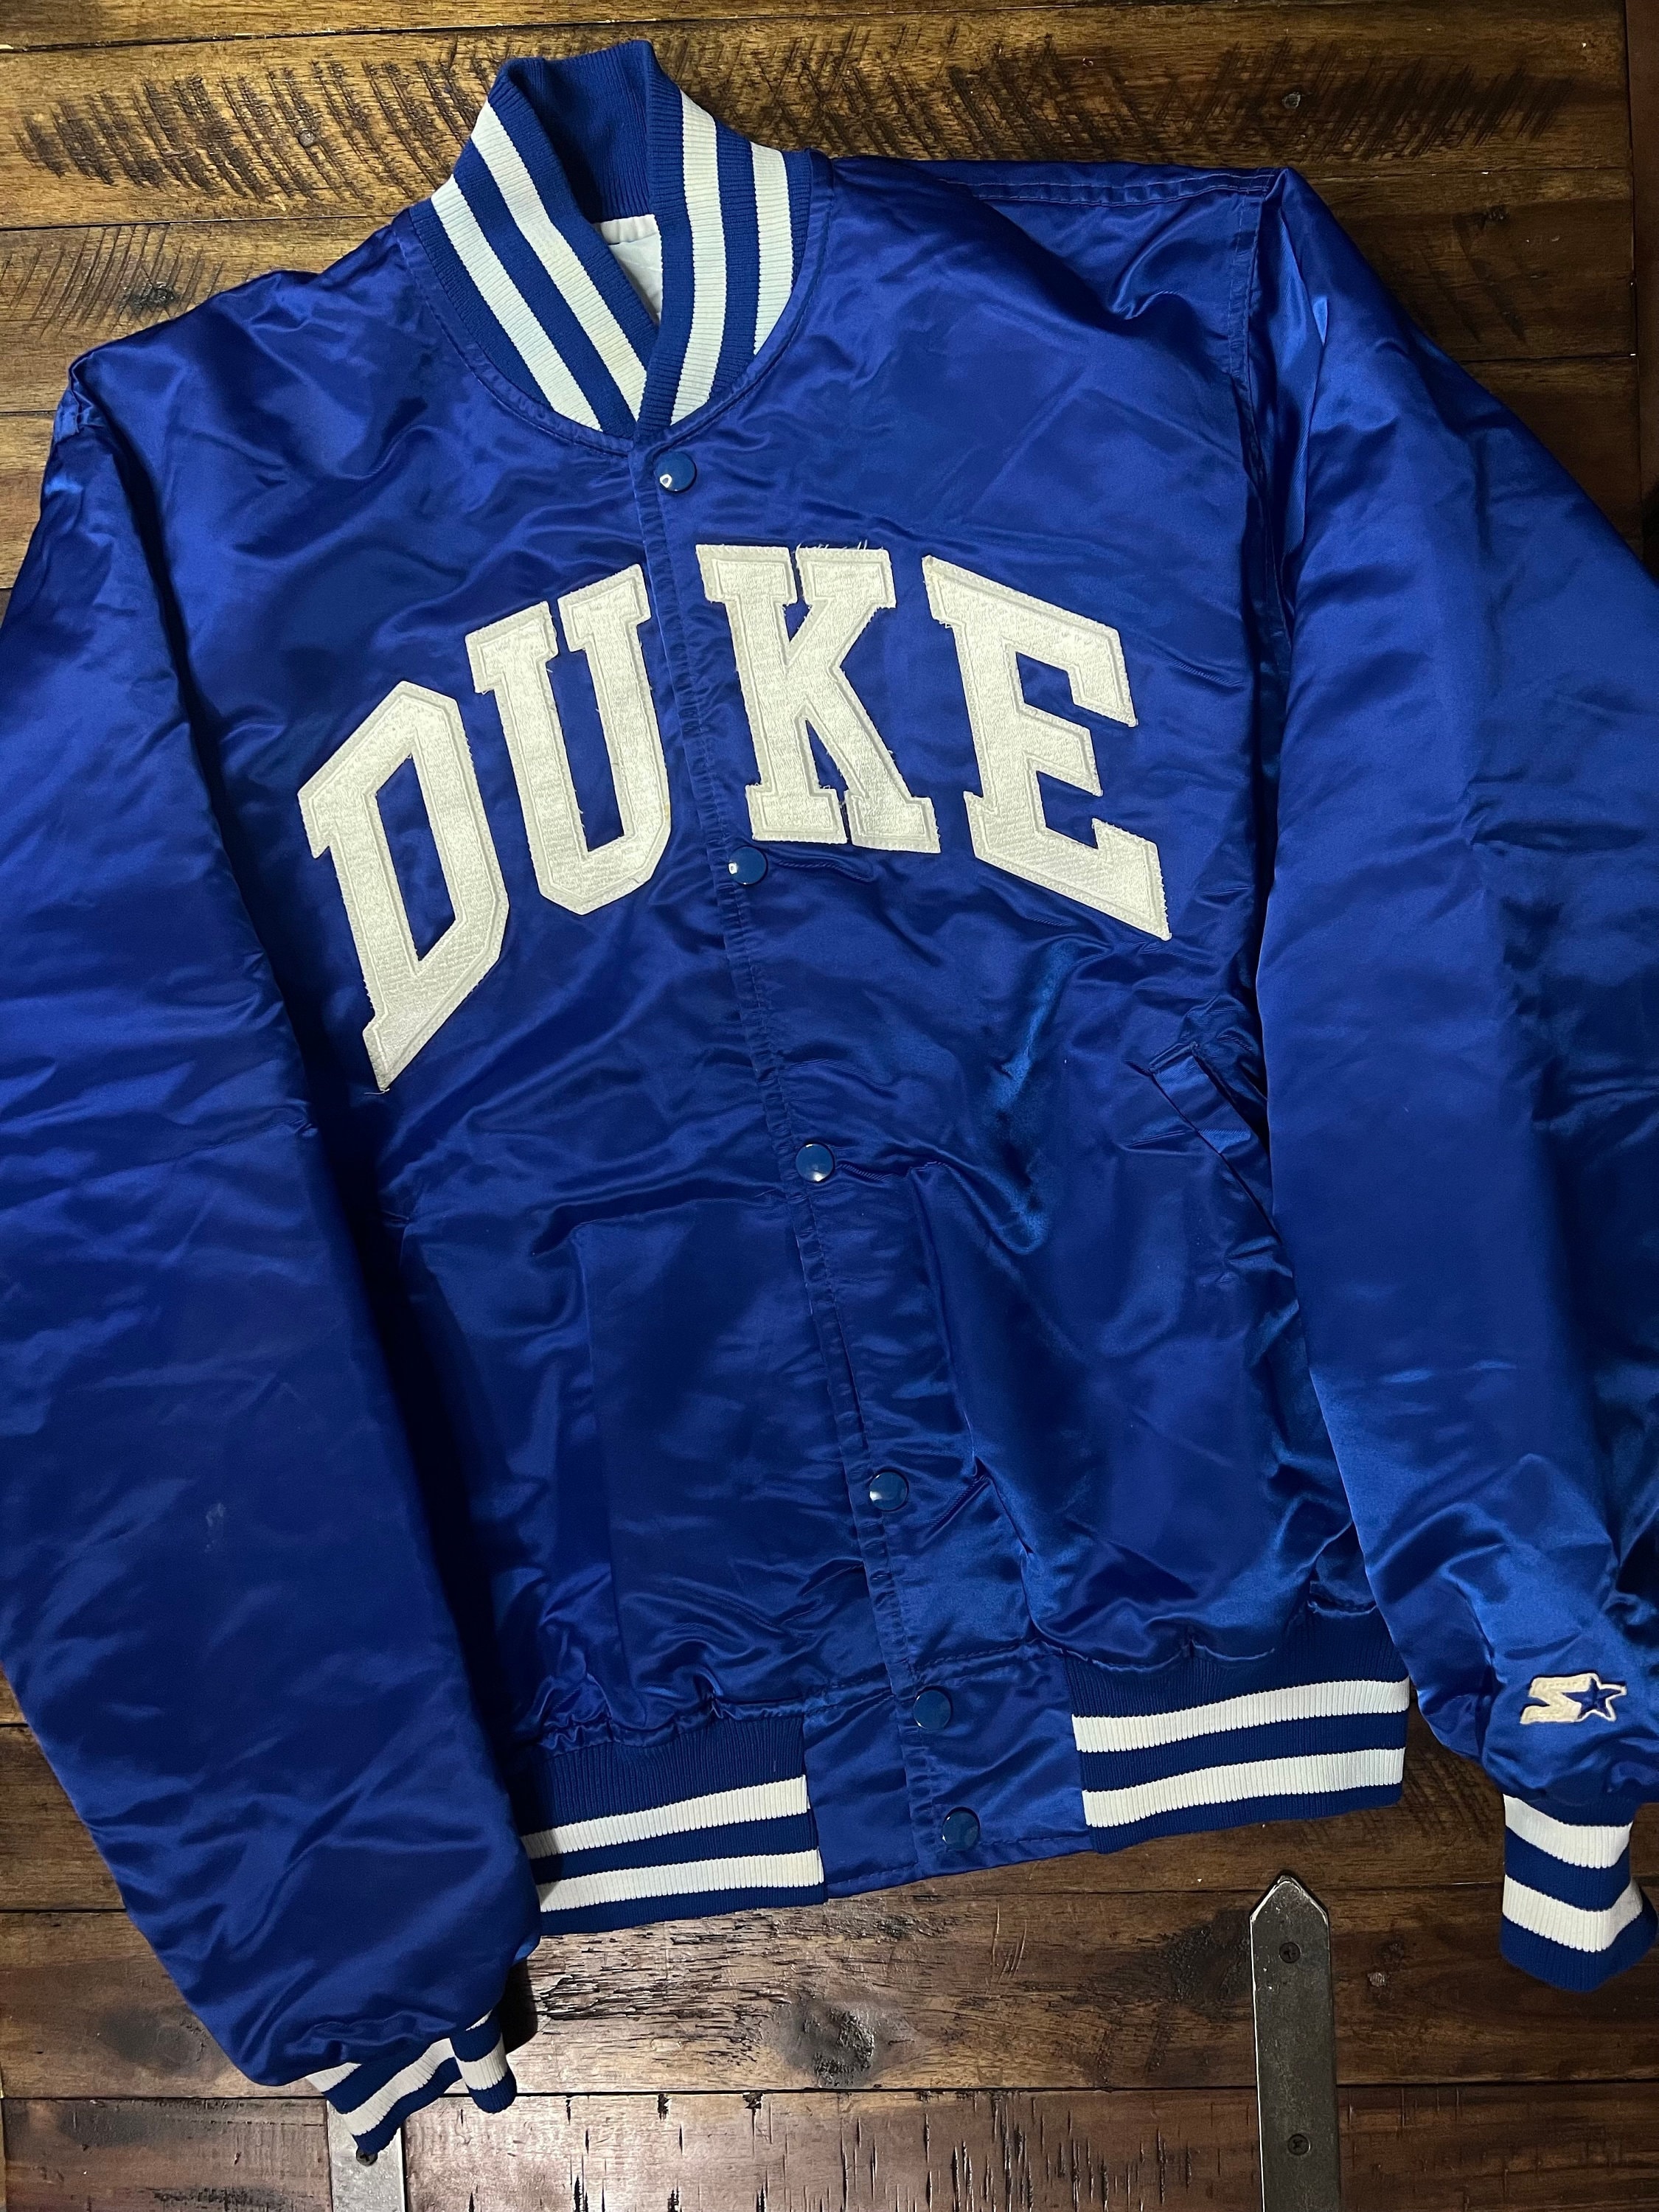 90's Grant Hill Duke Blue Devils Starter NCAA Jersey Size Large – Rare VNTG